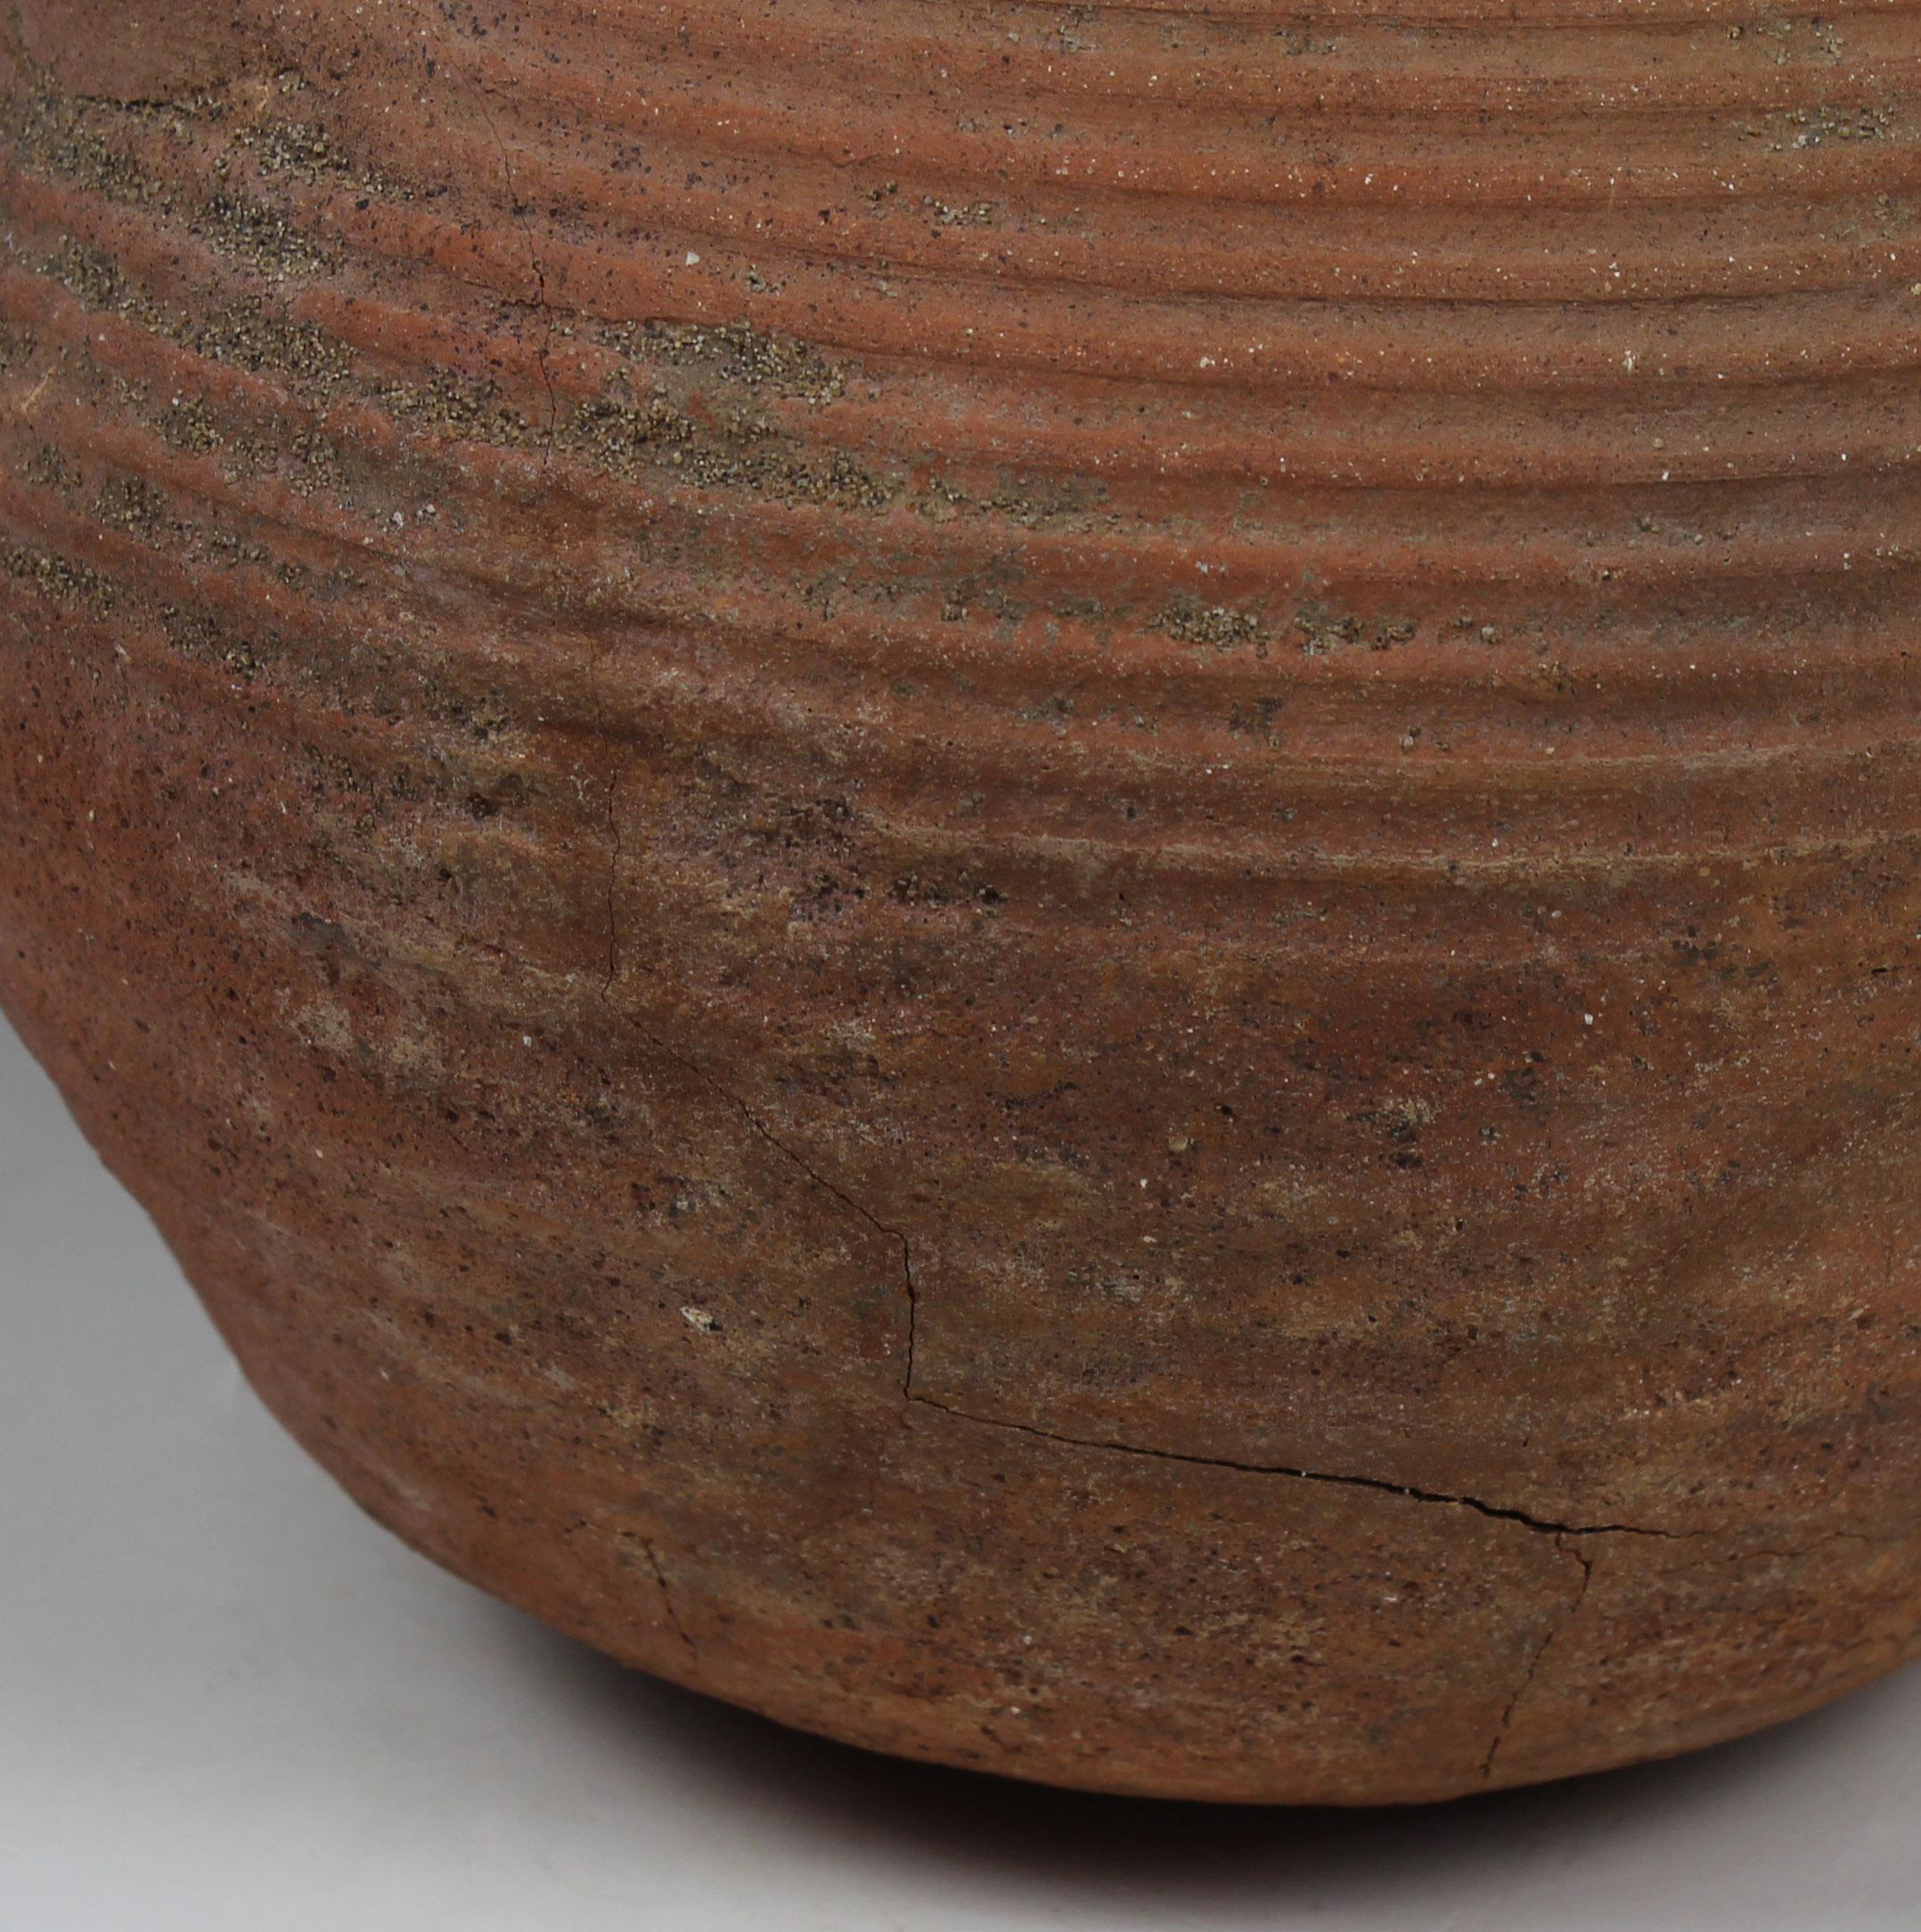 Pottery Roman cooking pot, Type ‘Kedera’